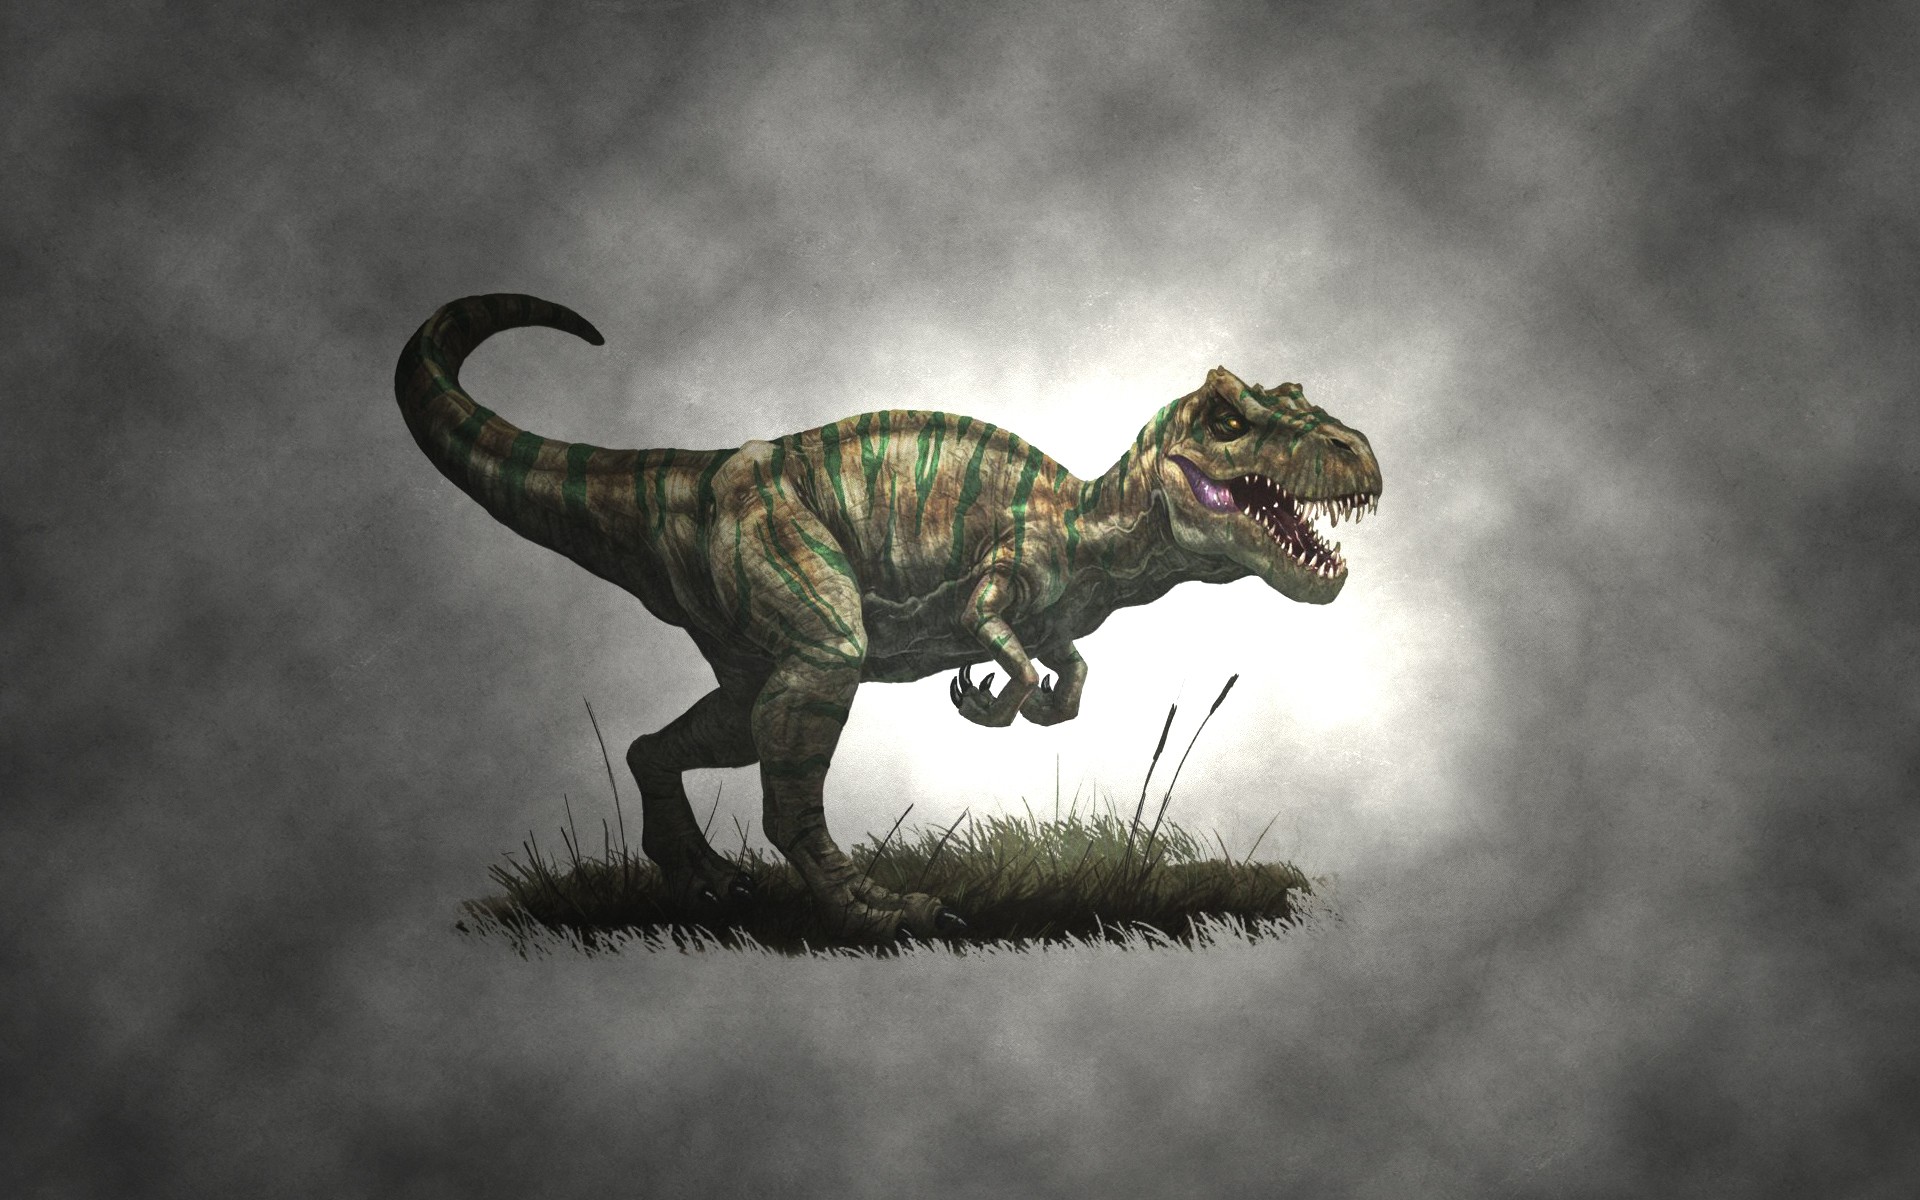 General 1920x1200 animals dinosaurs Tyrannosaurus rex nature drawing artwork minimalism simple background digital art